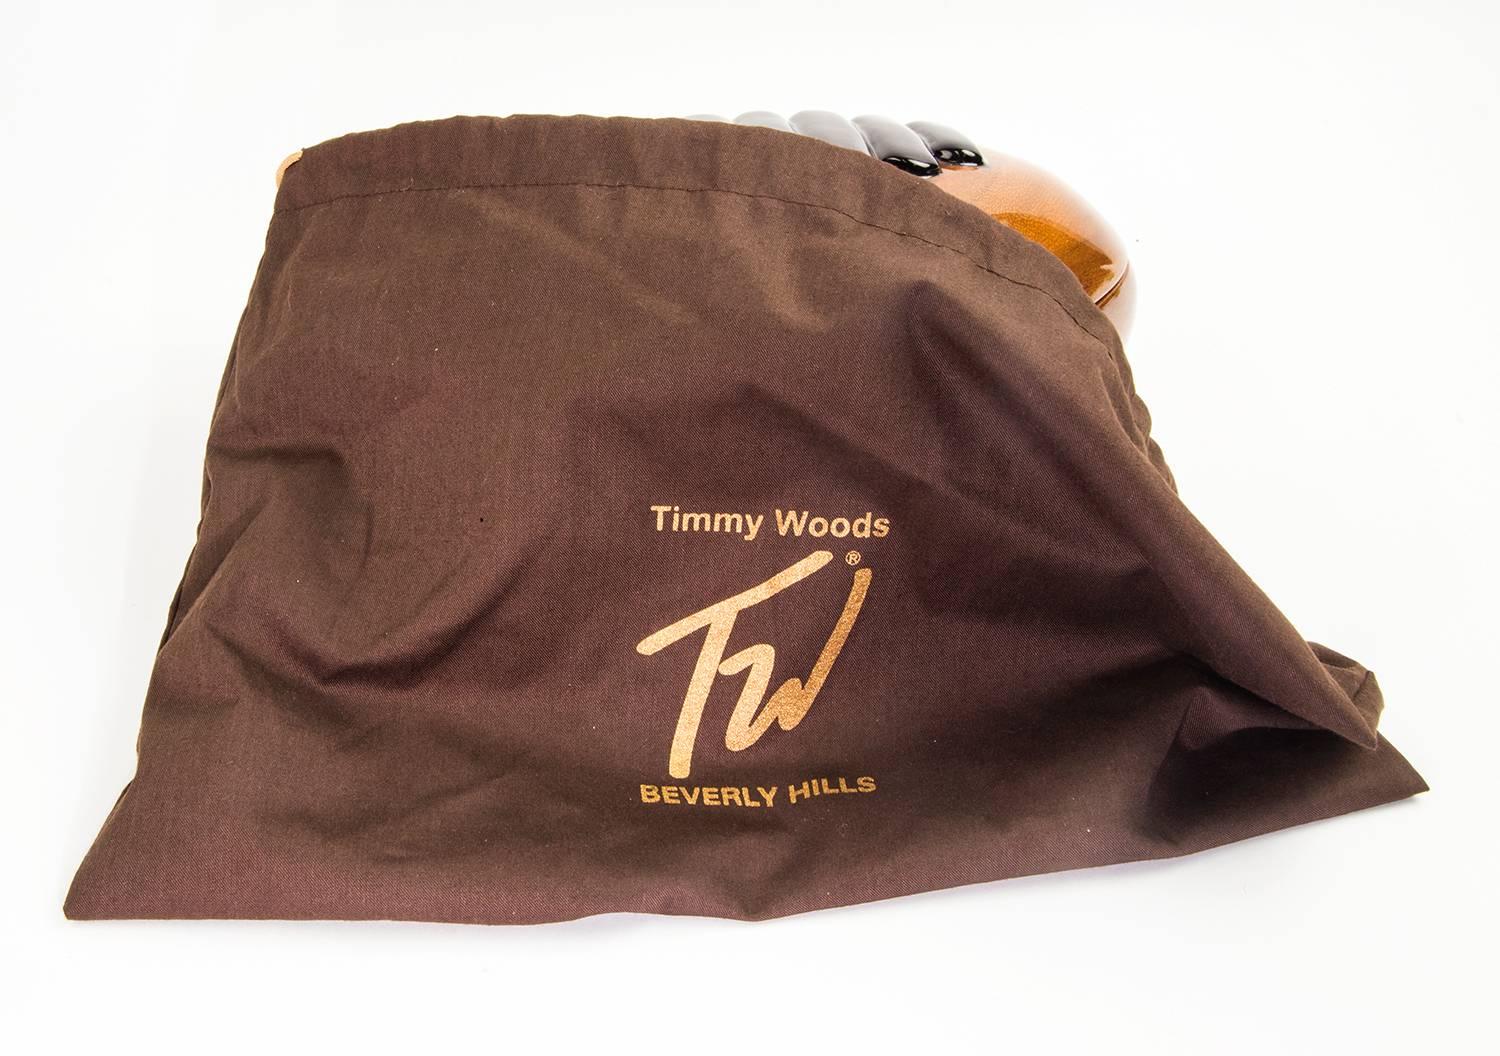 Timmy Woods of Beverly Hills Acacia Wood Handbag Purse Clutch NWT 3